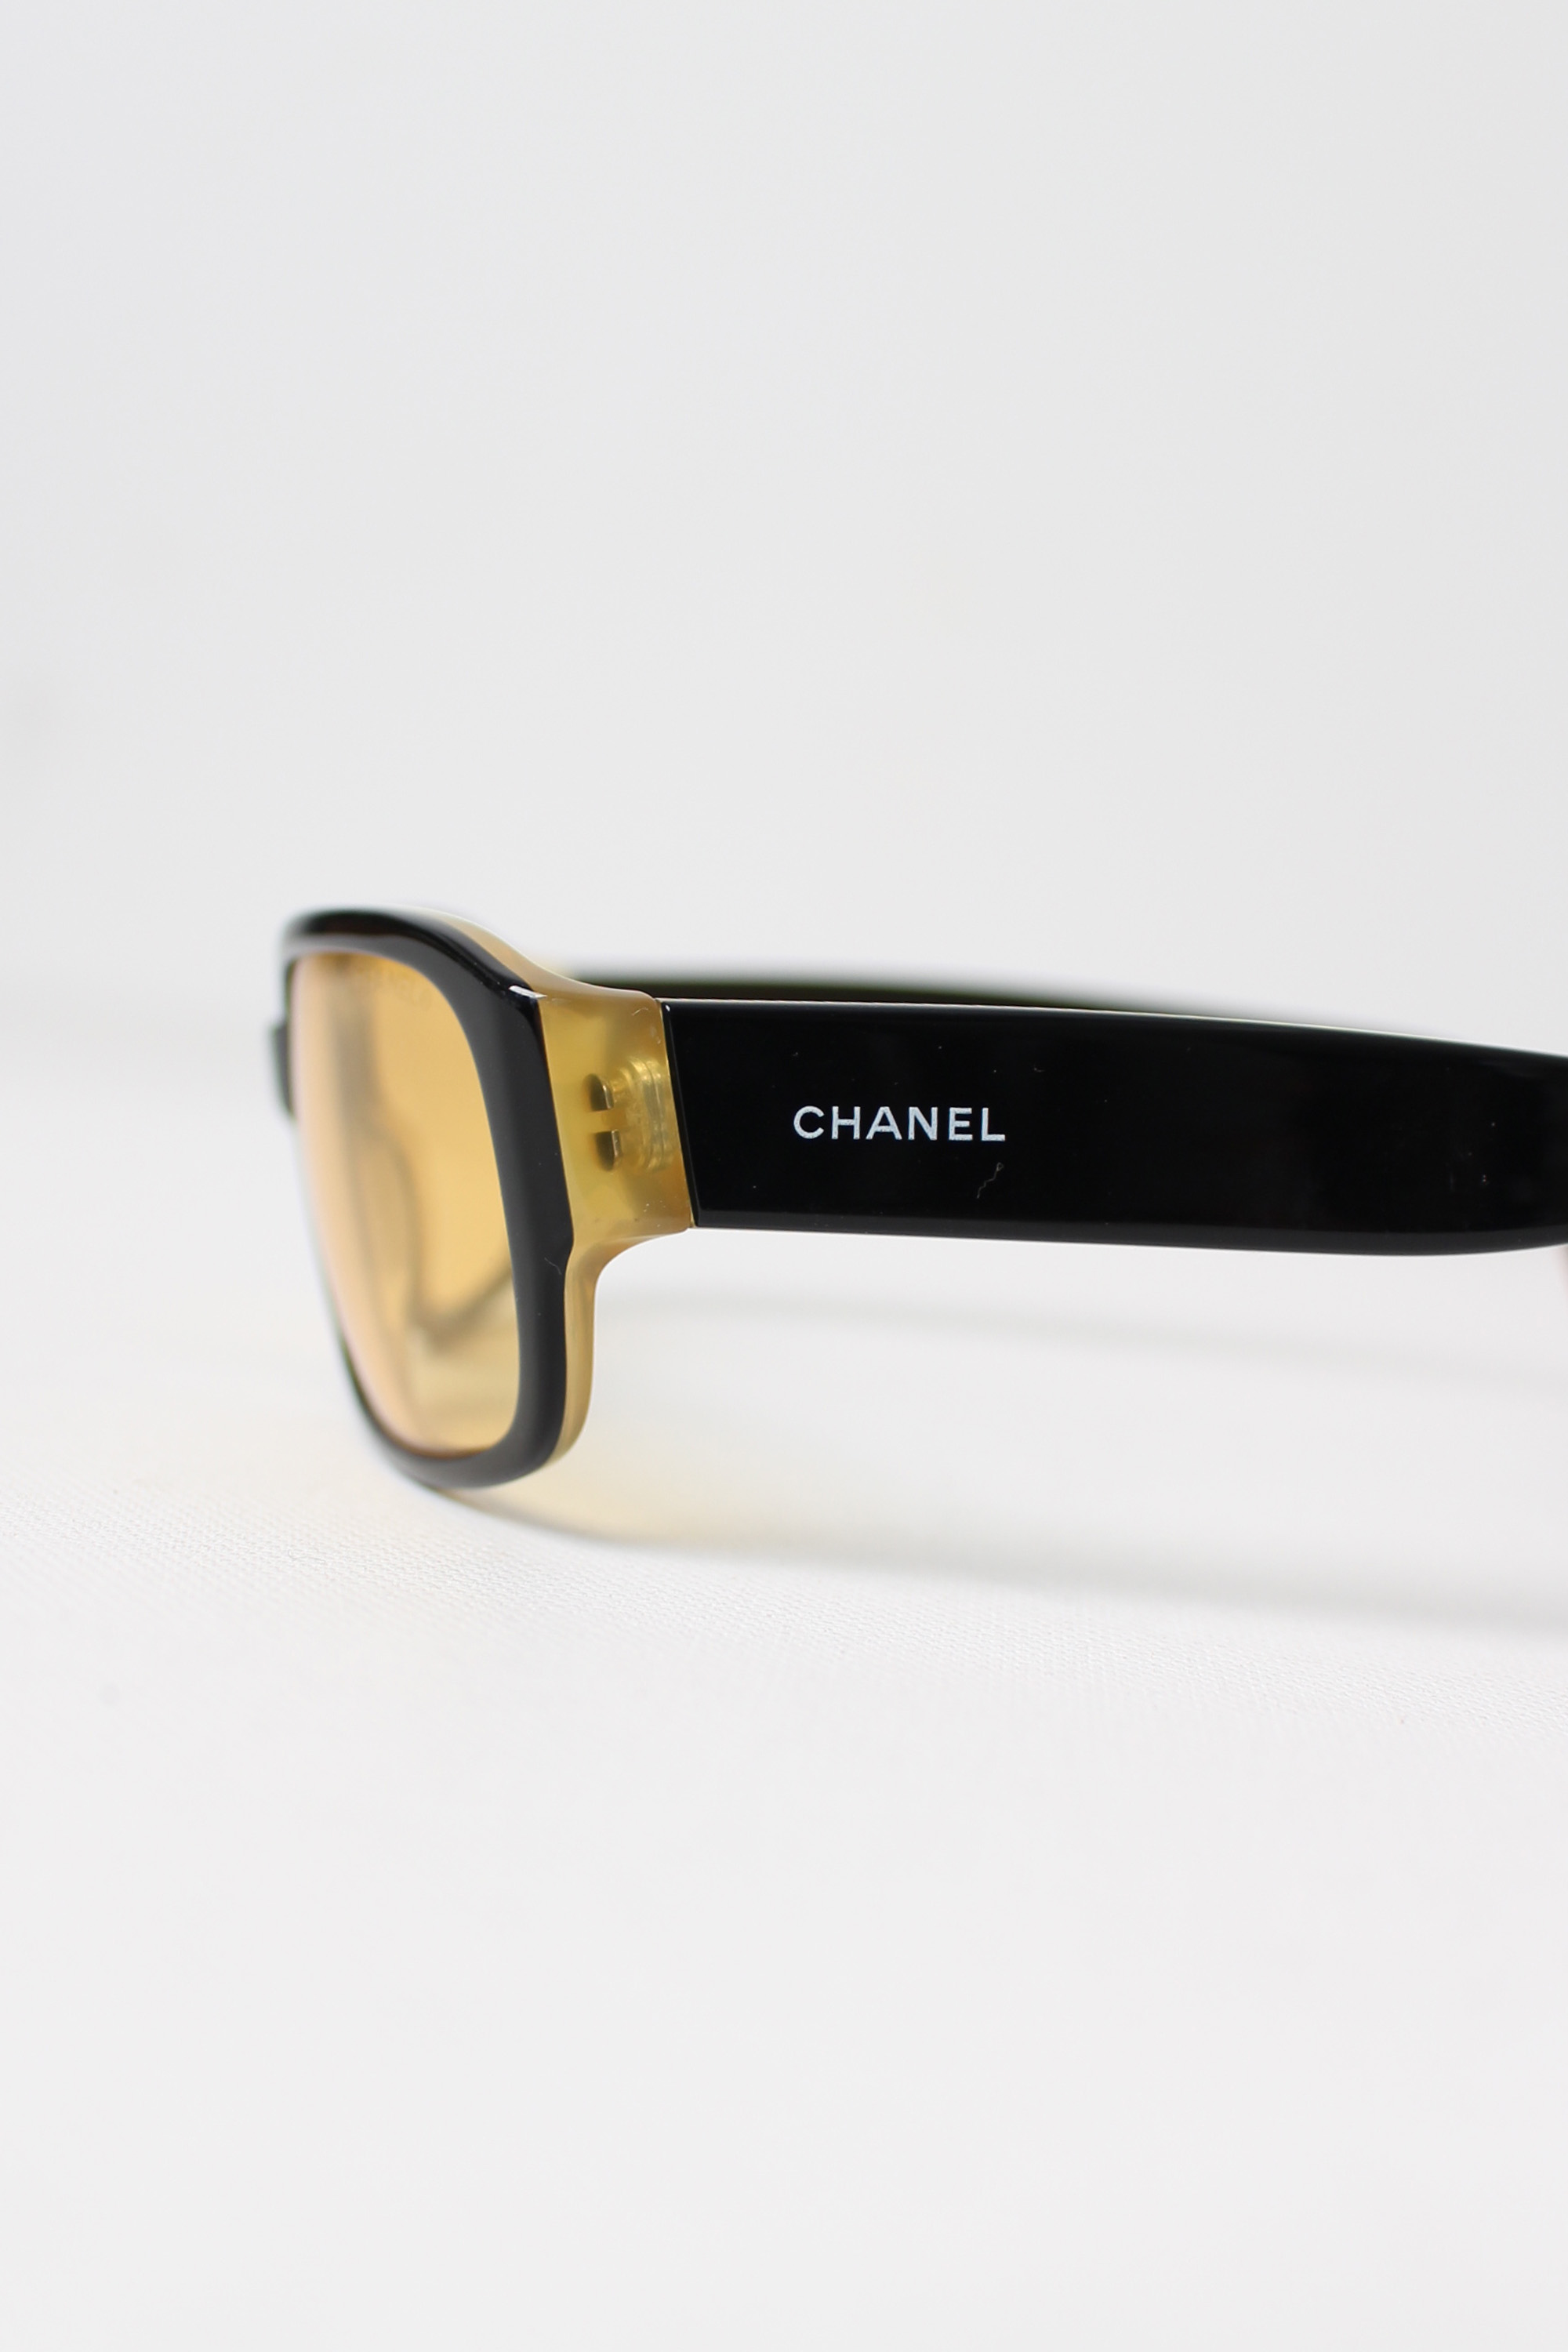 Chanel 5010 Sunglasses